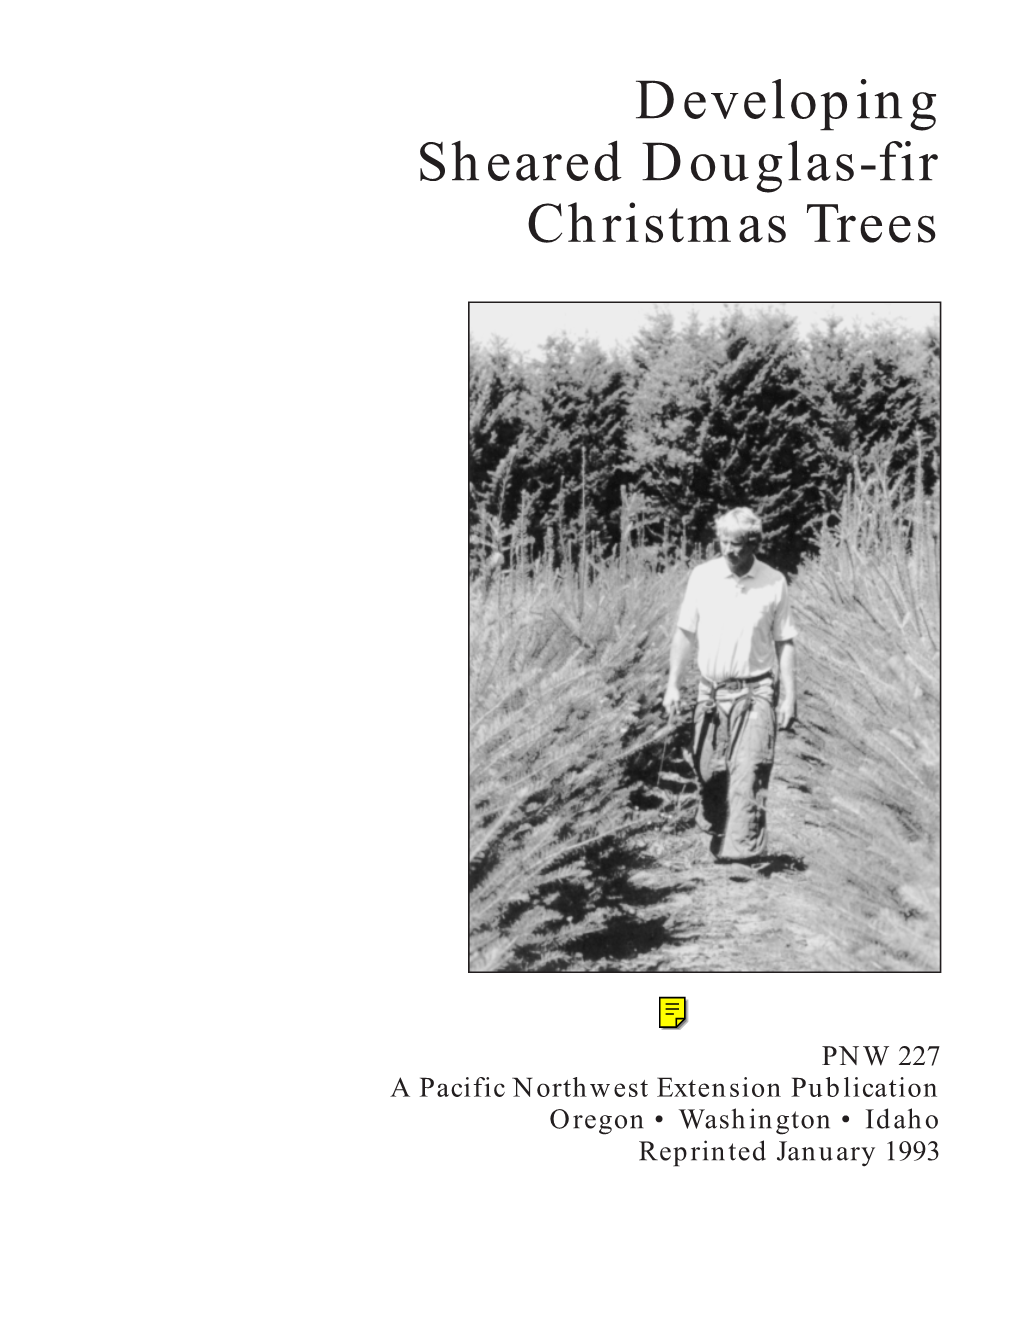 Developing Sheared Douglas-Fir Christmas Trees